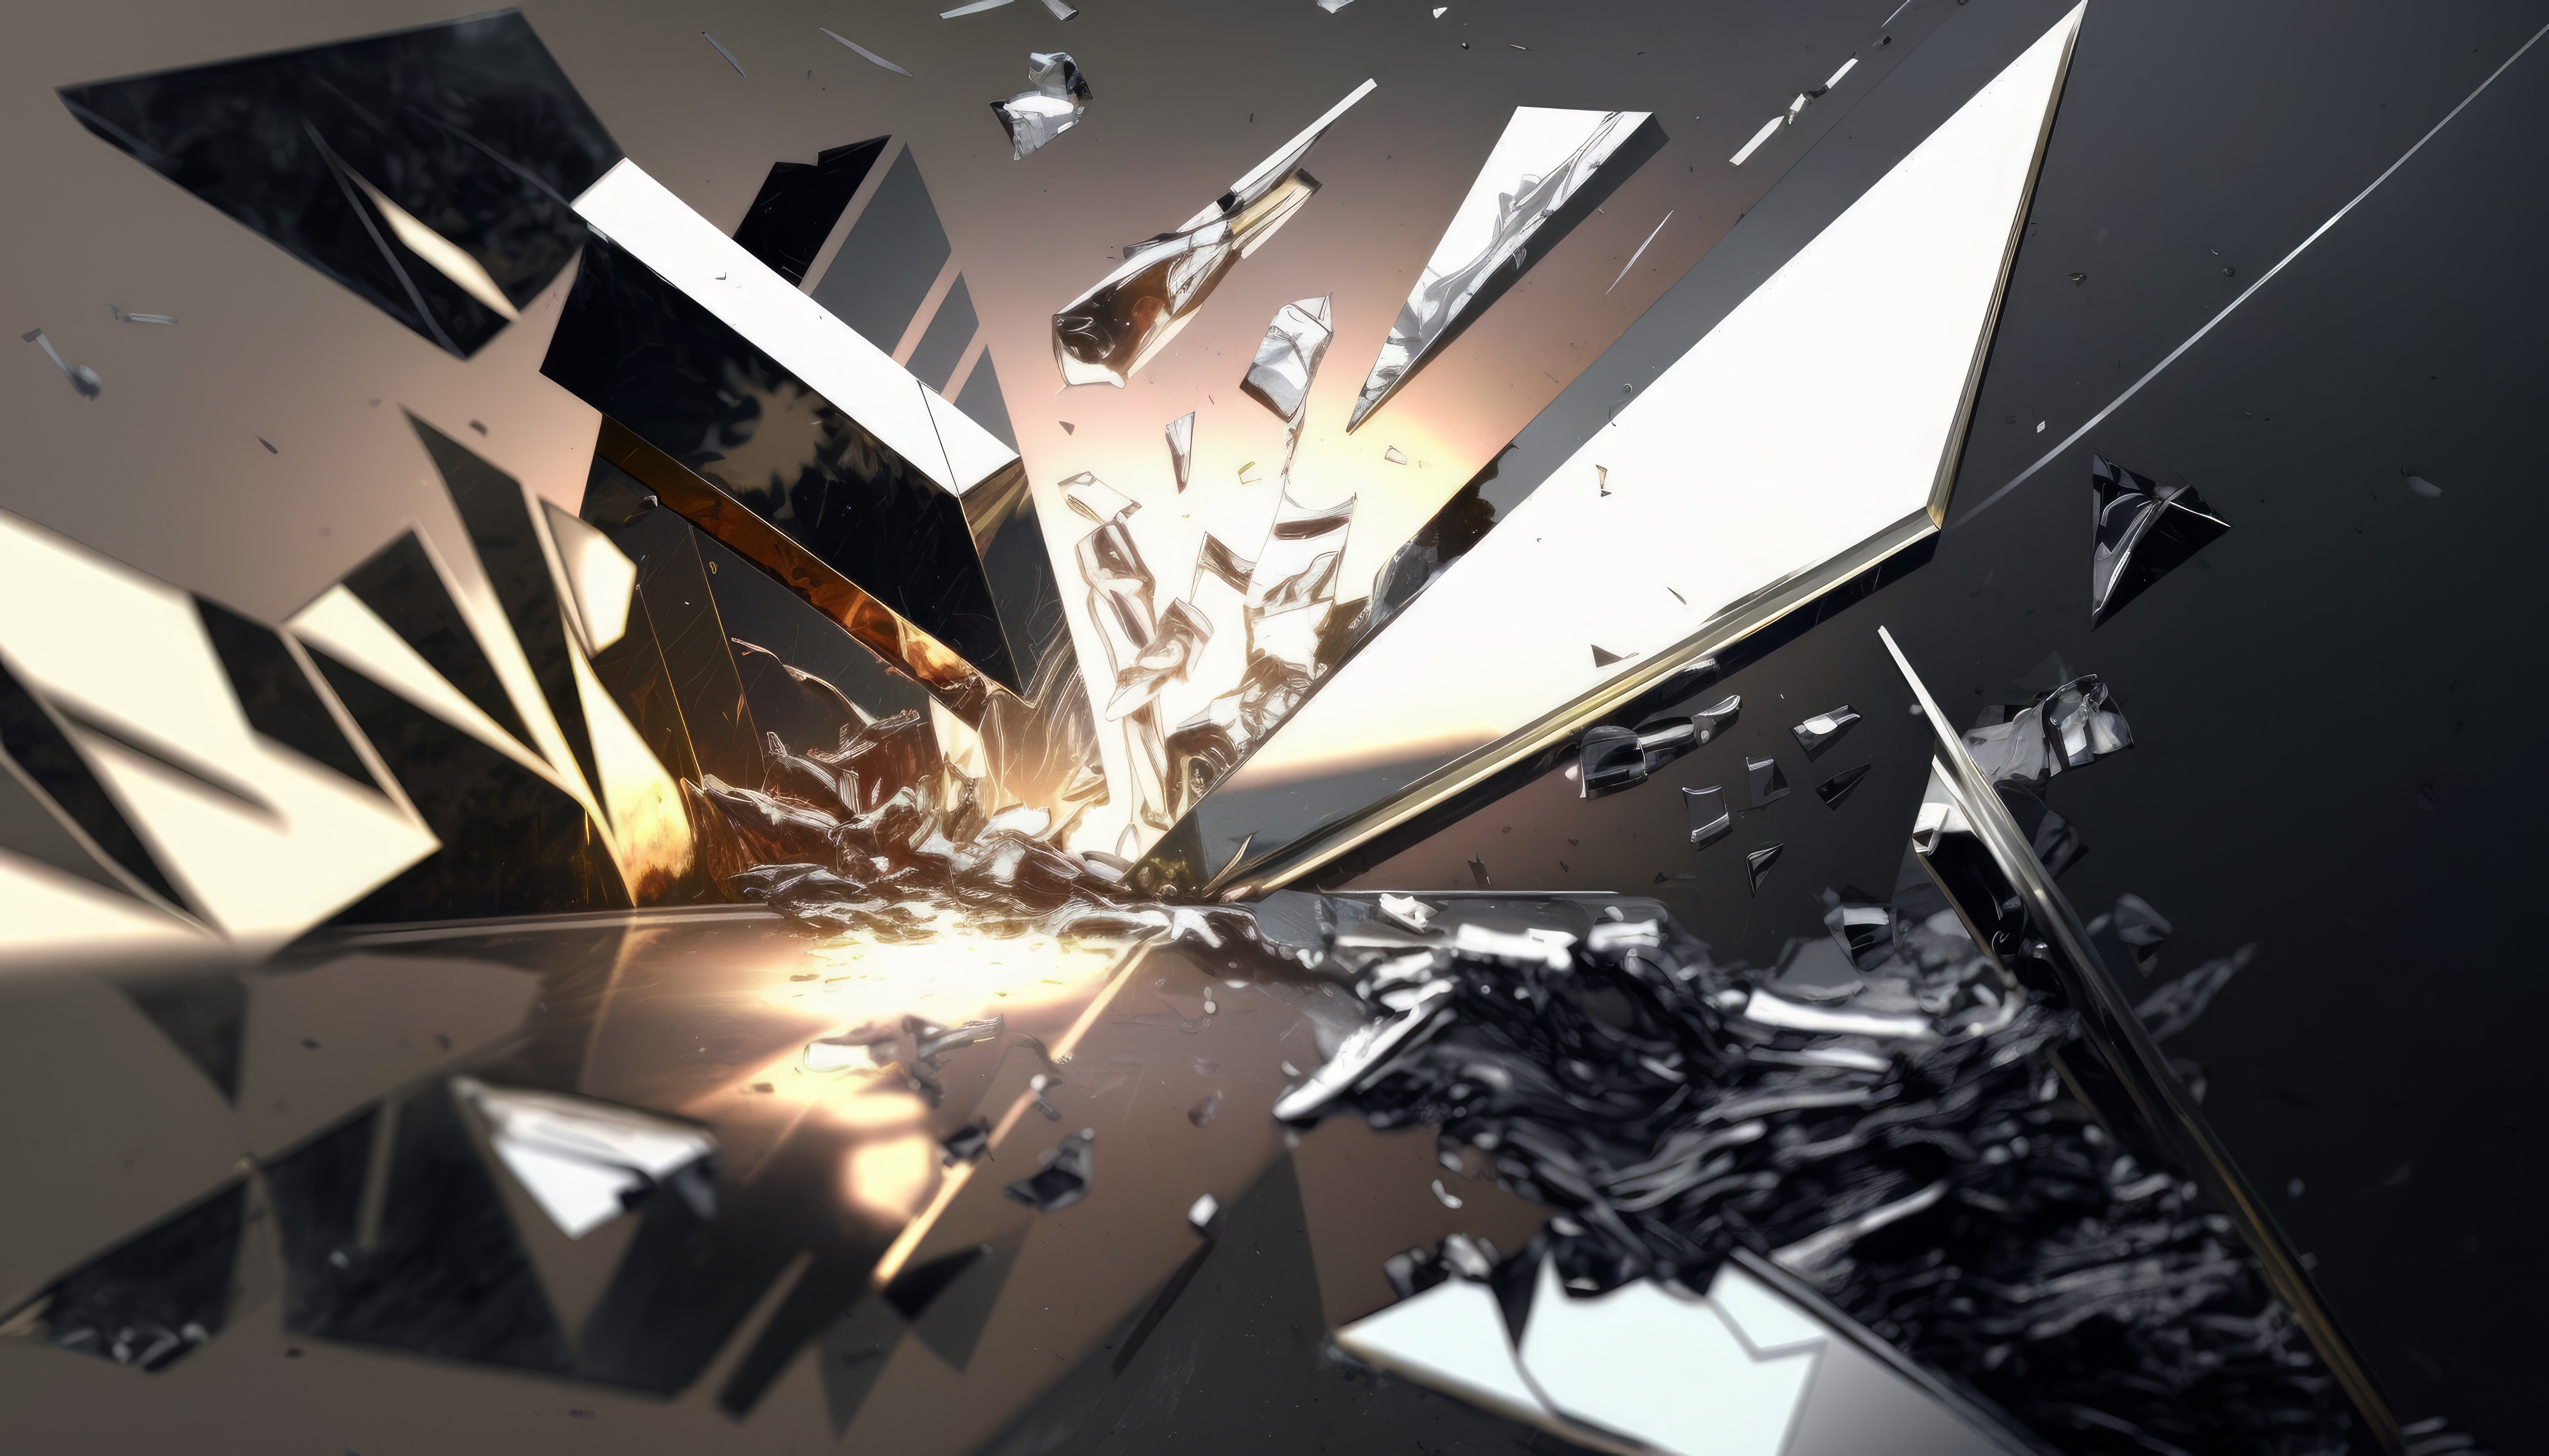 General 4579x2616 AI art abstract shards explosion broken glass